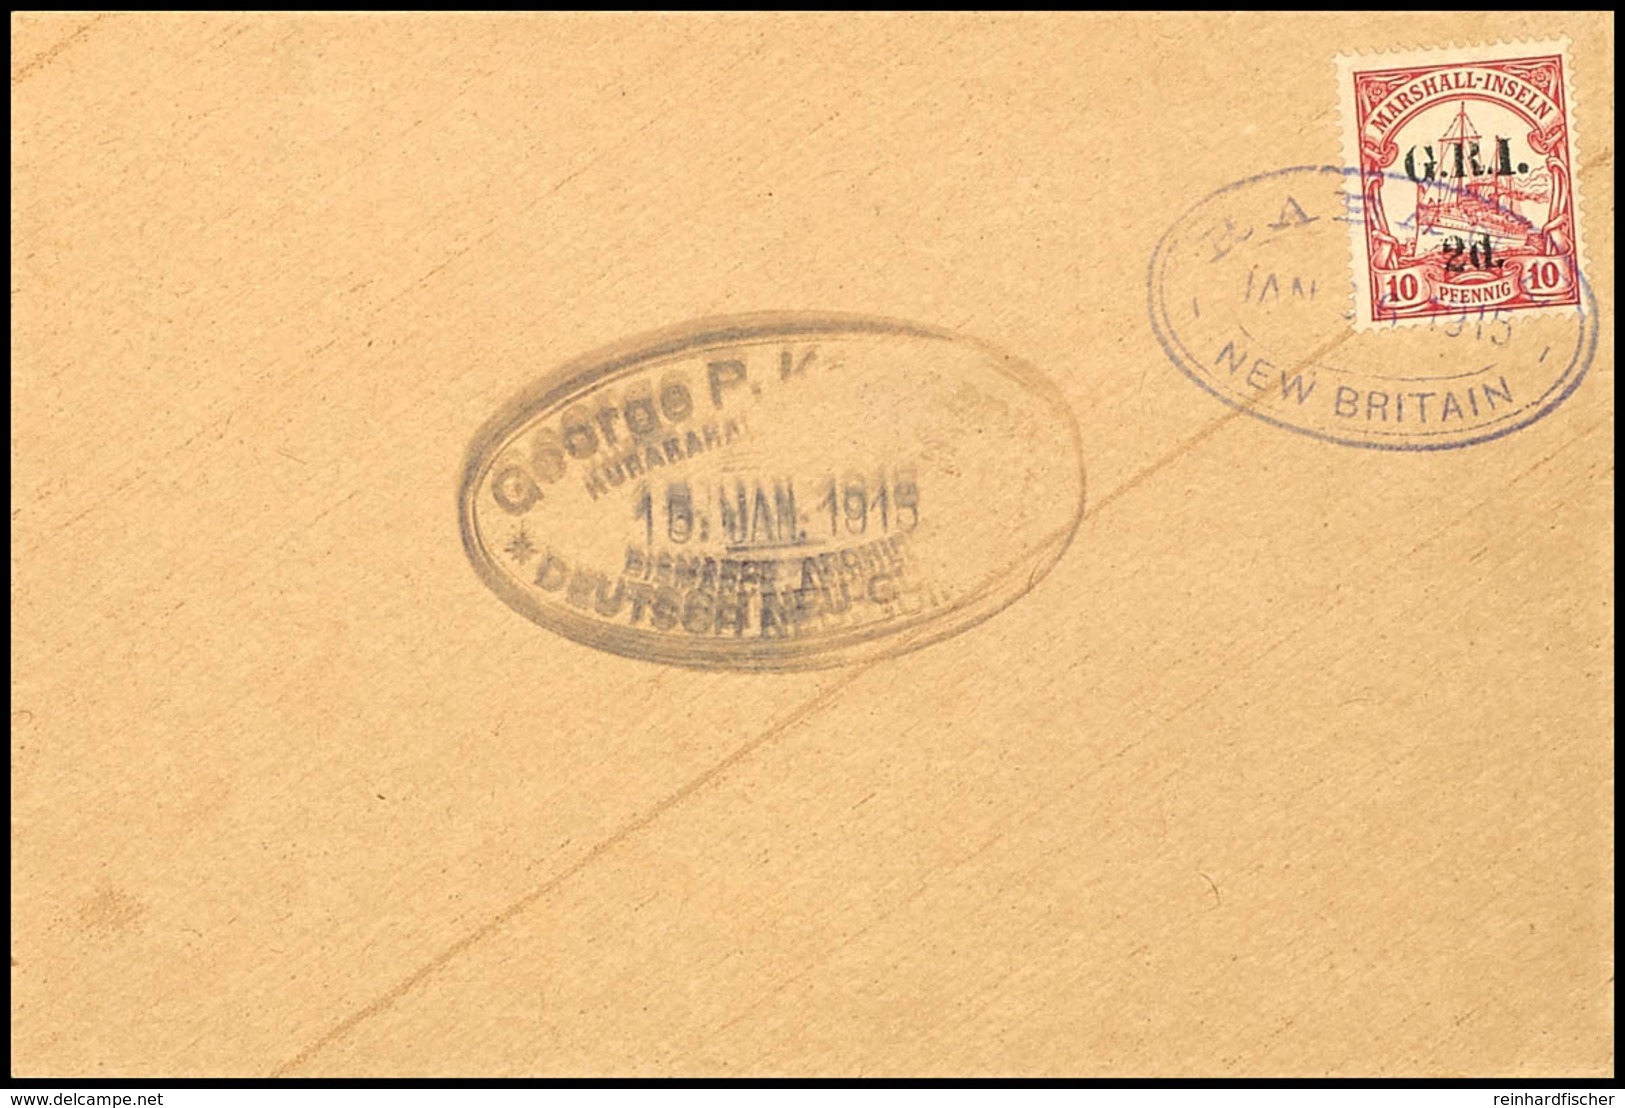 3739 2 D Auf 10 Pfg Kaiseryacht, Type I, Auf Blanko-Umschlag Mit Ovalstempel "RABAUL JAN 26 1915", Tadellos, Katalog: 3I - Marshall Islands